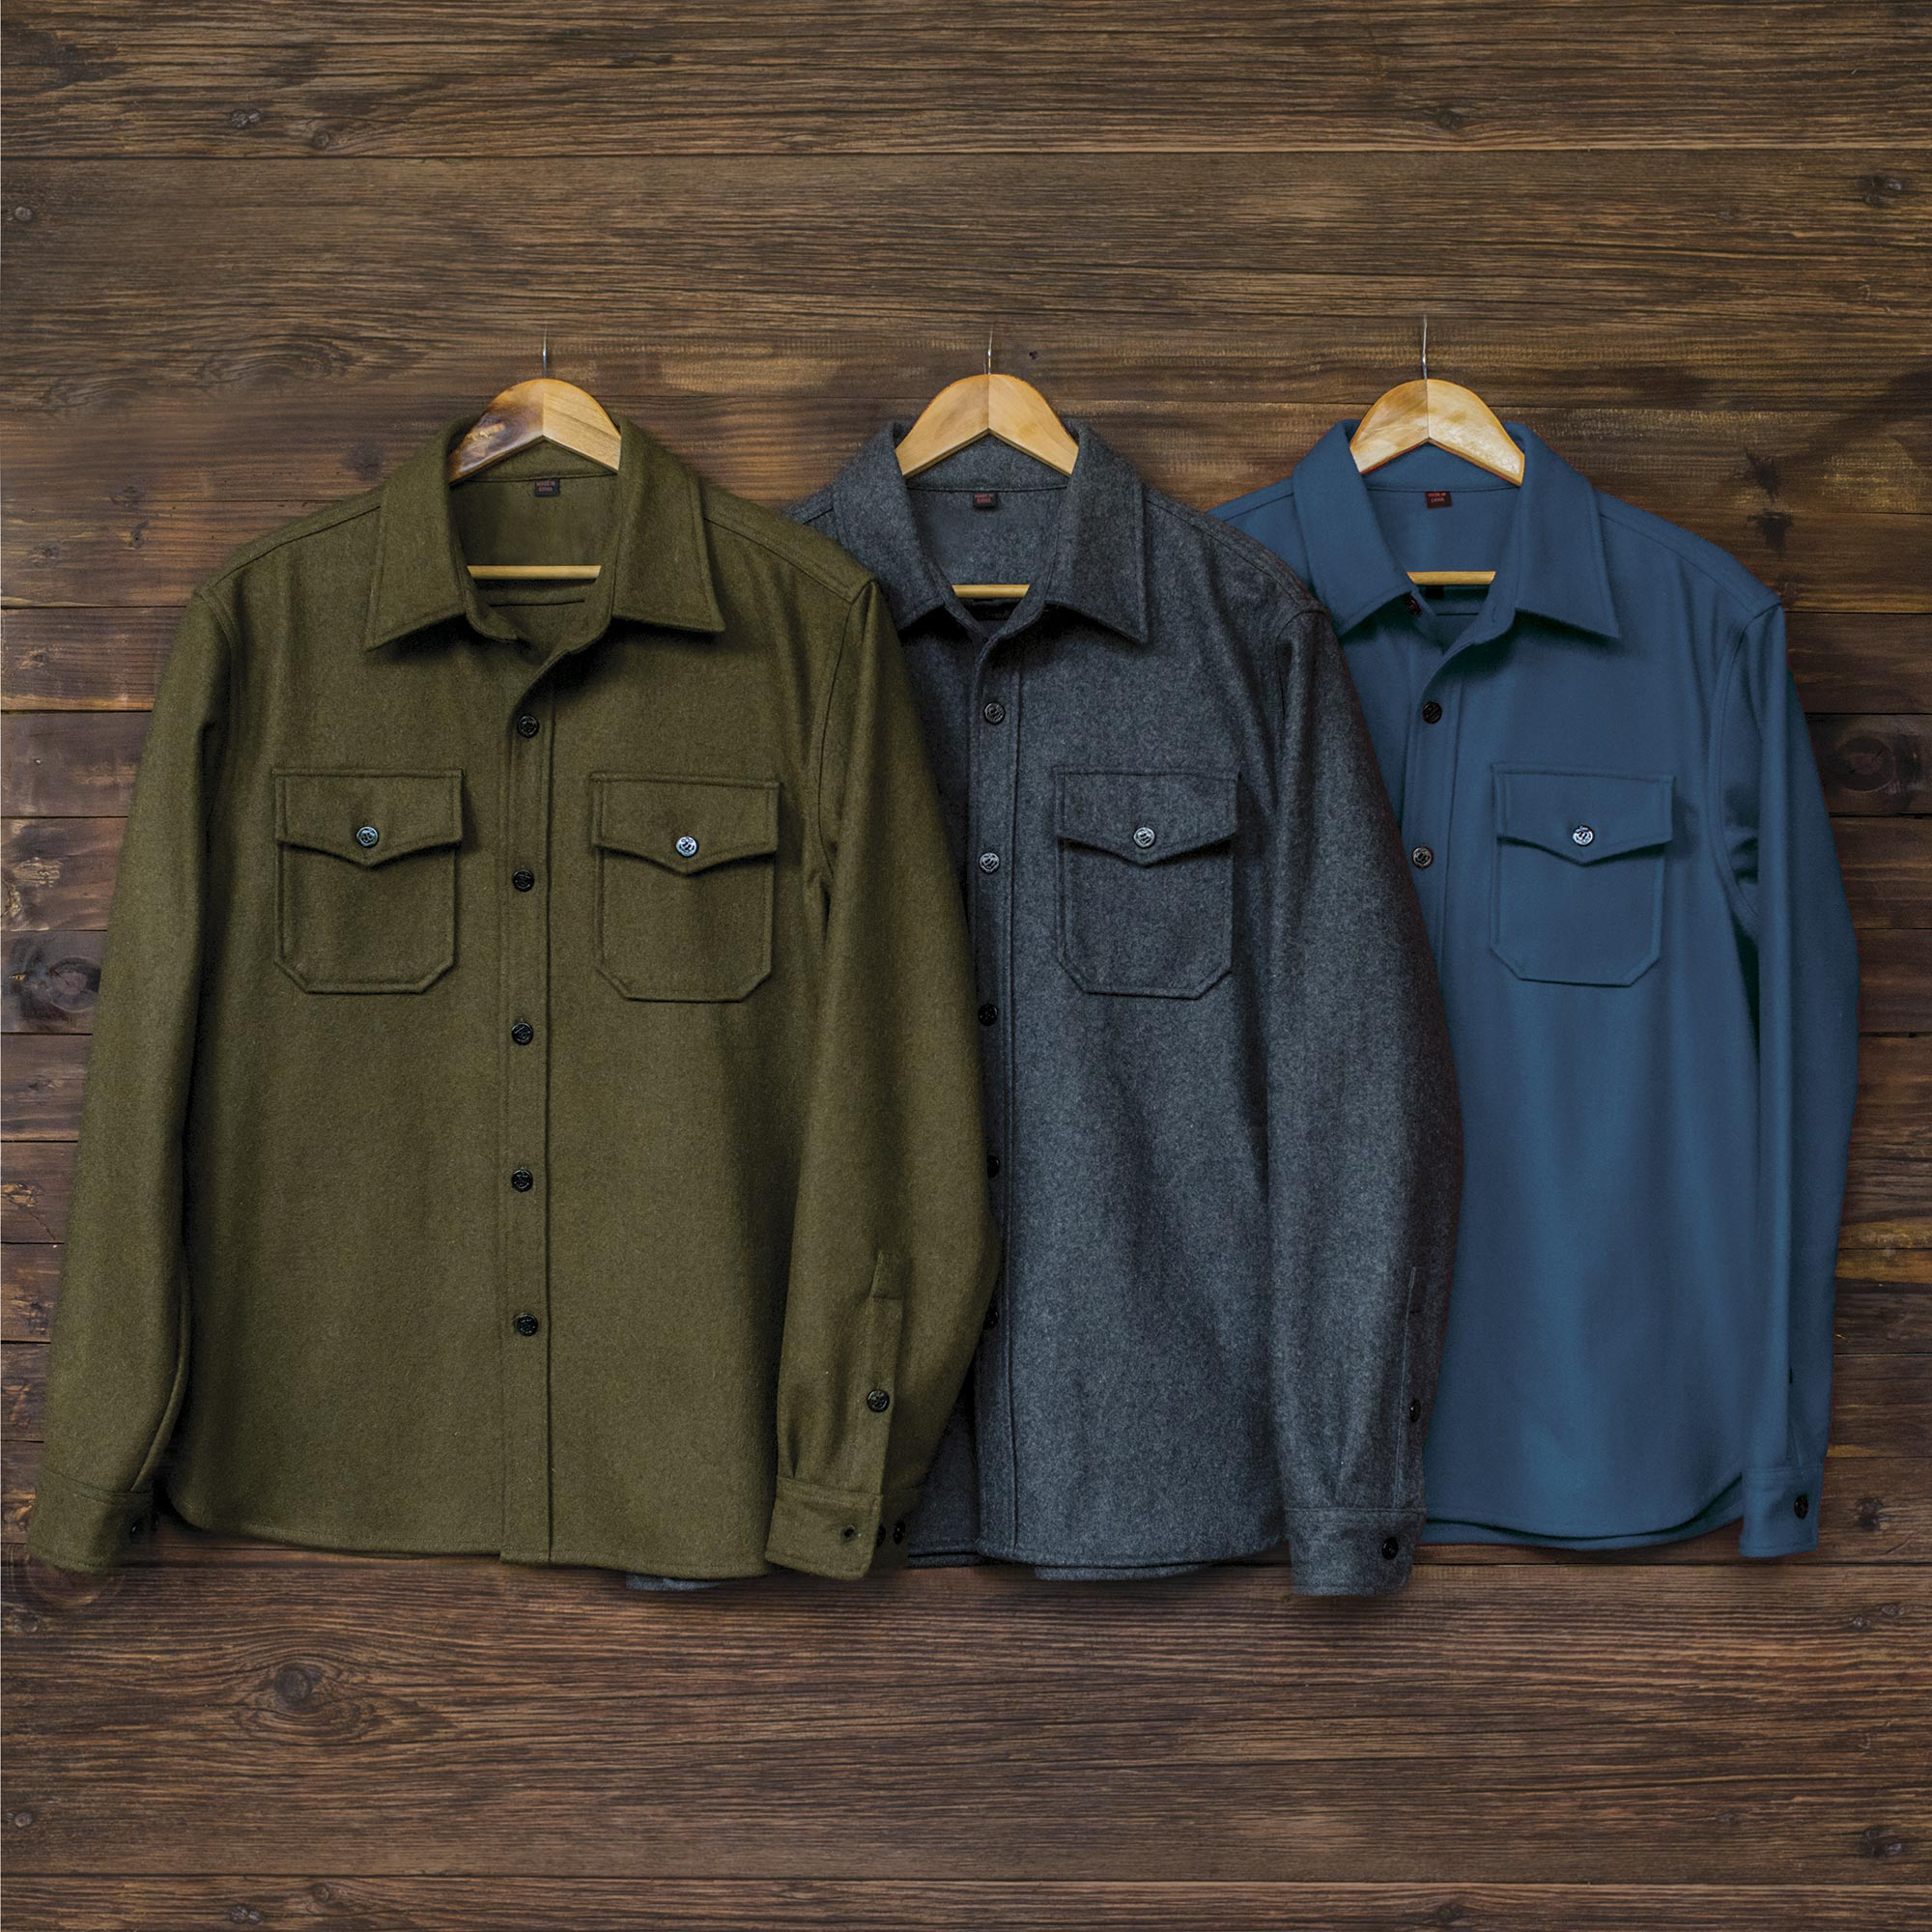 Men's Wool Blend Button-Down CPO Shirt Jacket - First Watch | NOVICA